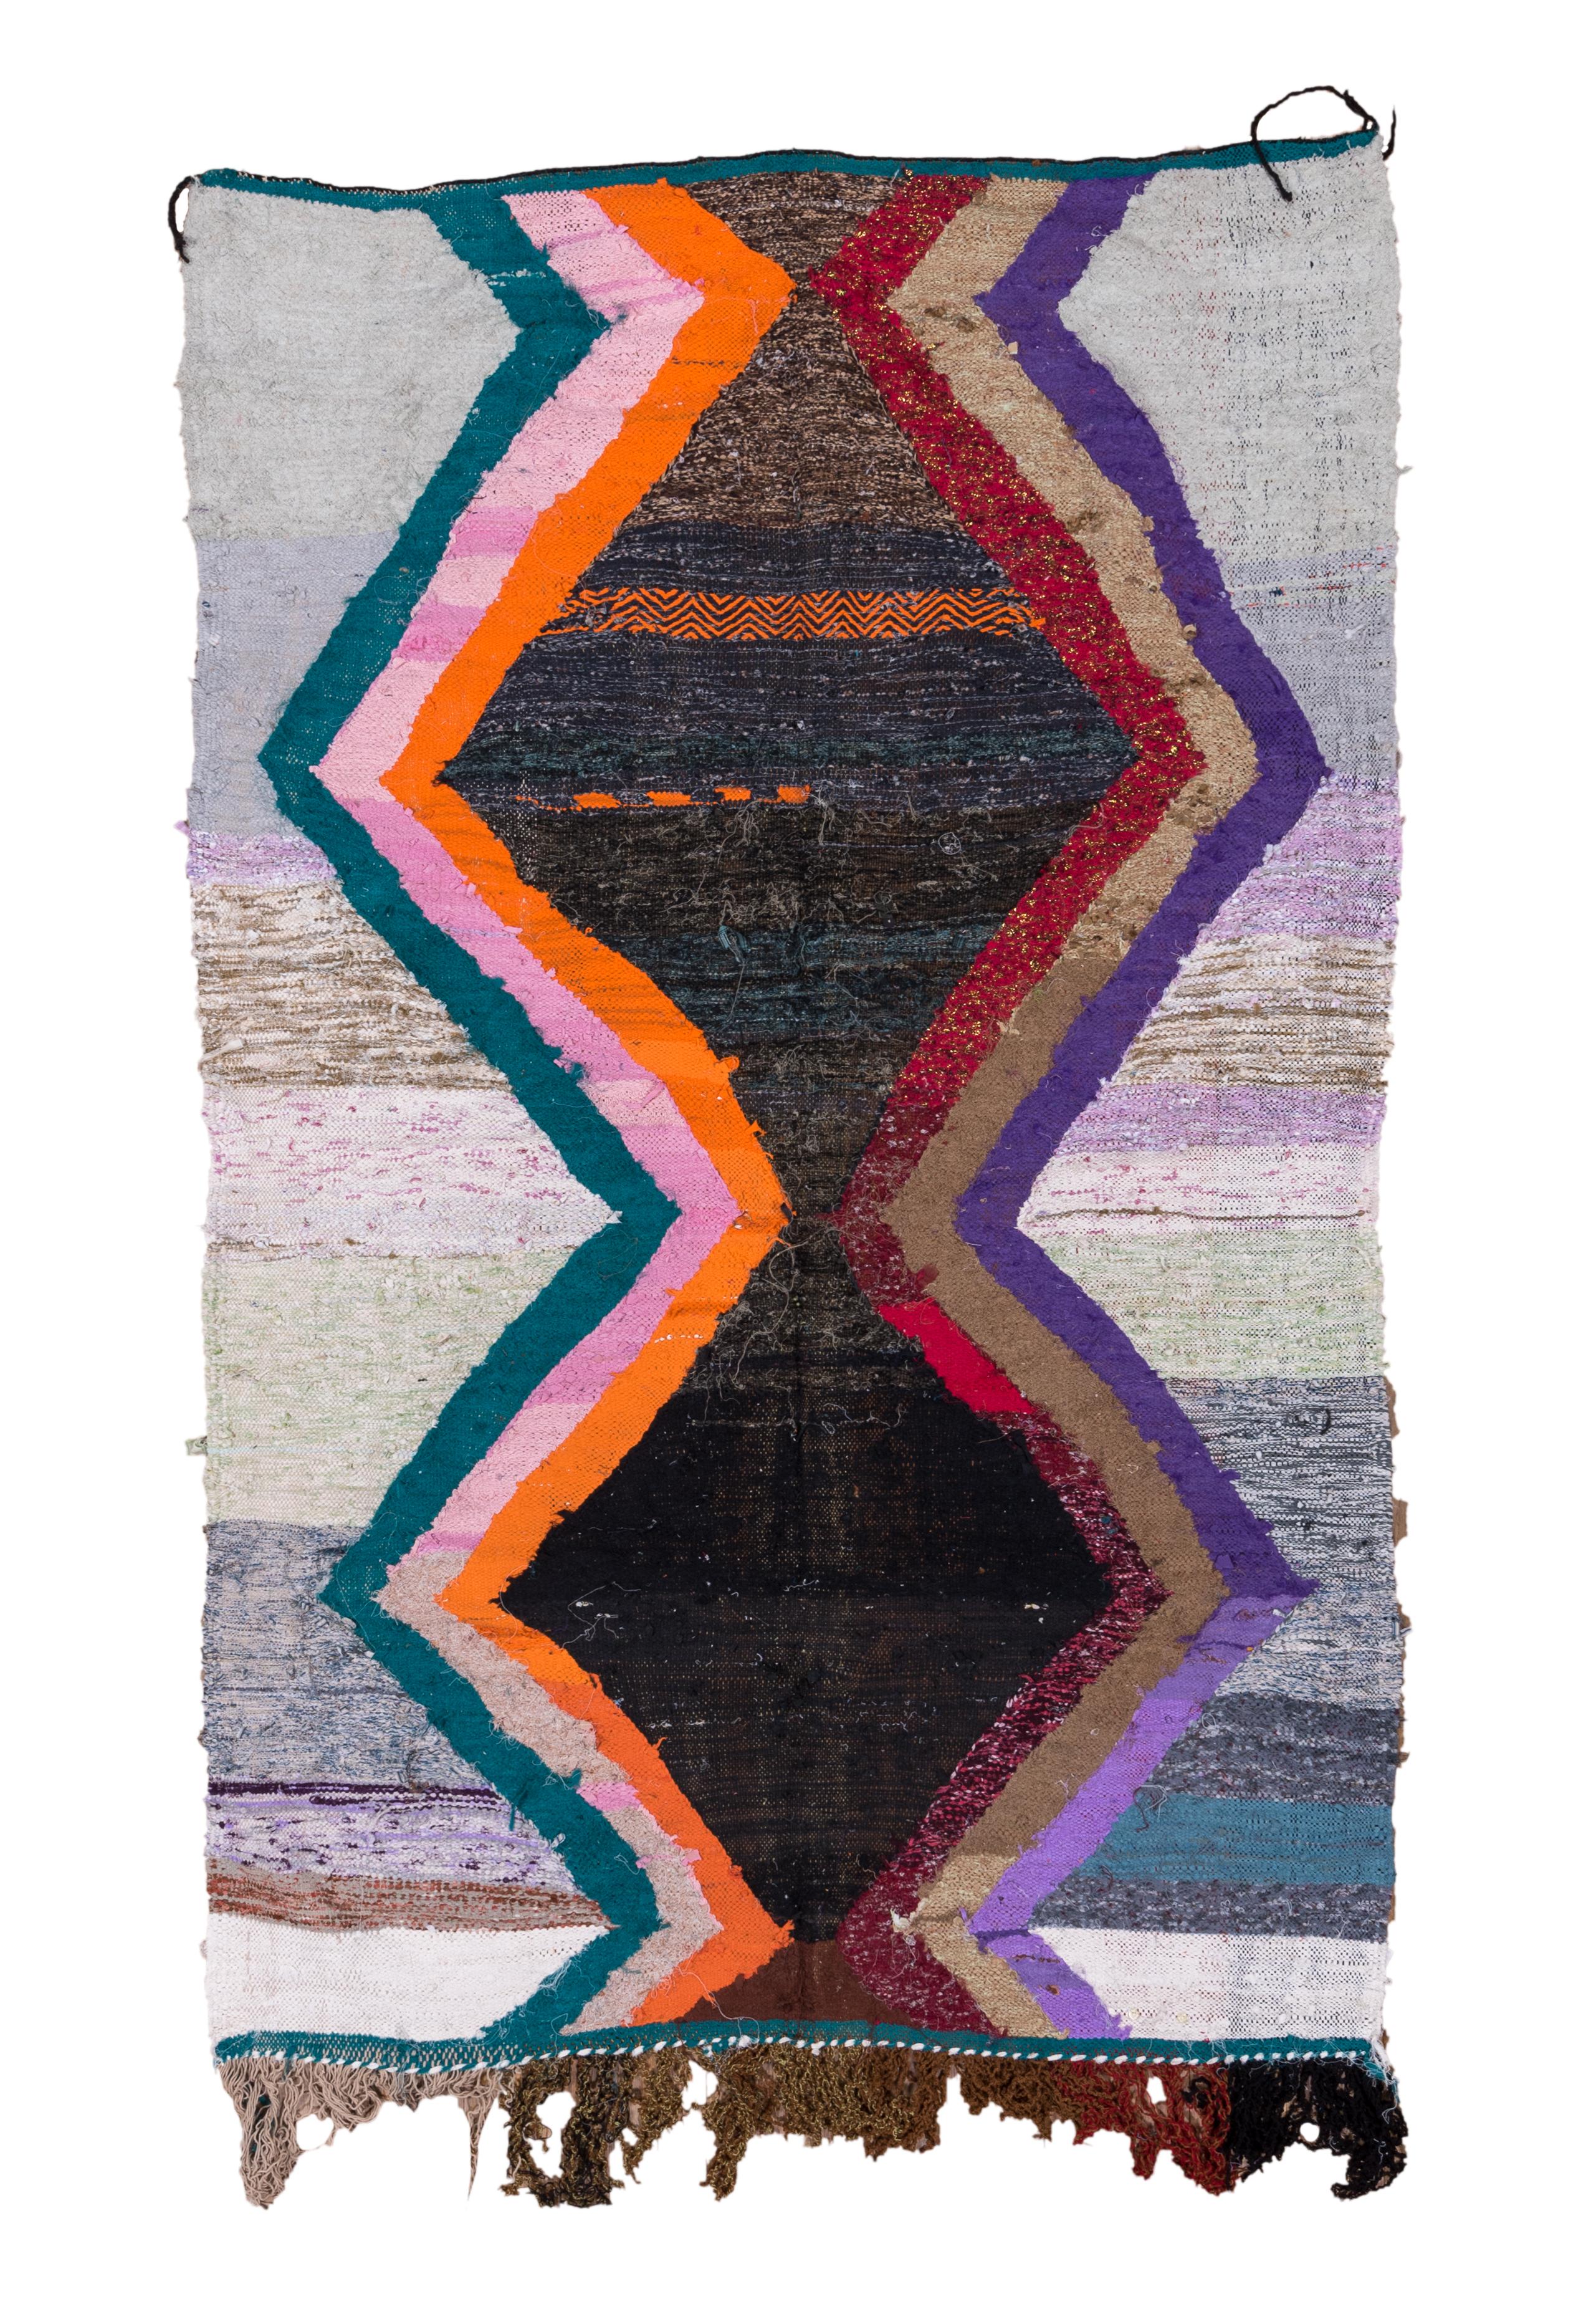 Modern Multicolor shag rug
Circa 1950s
4'9x7'5.